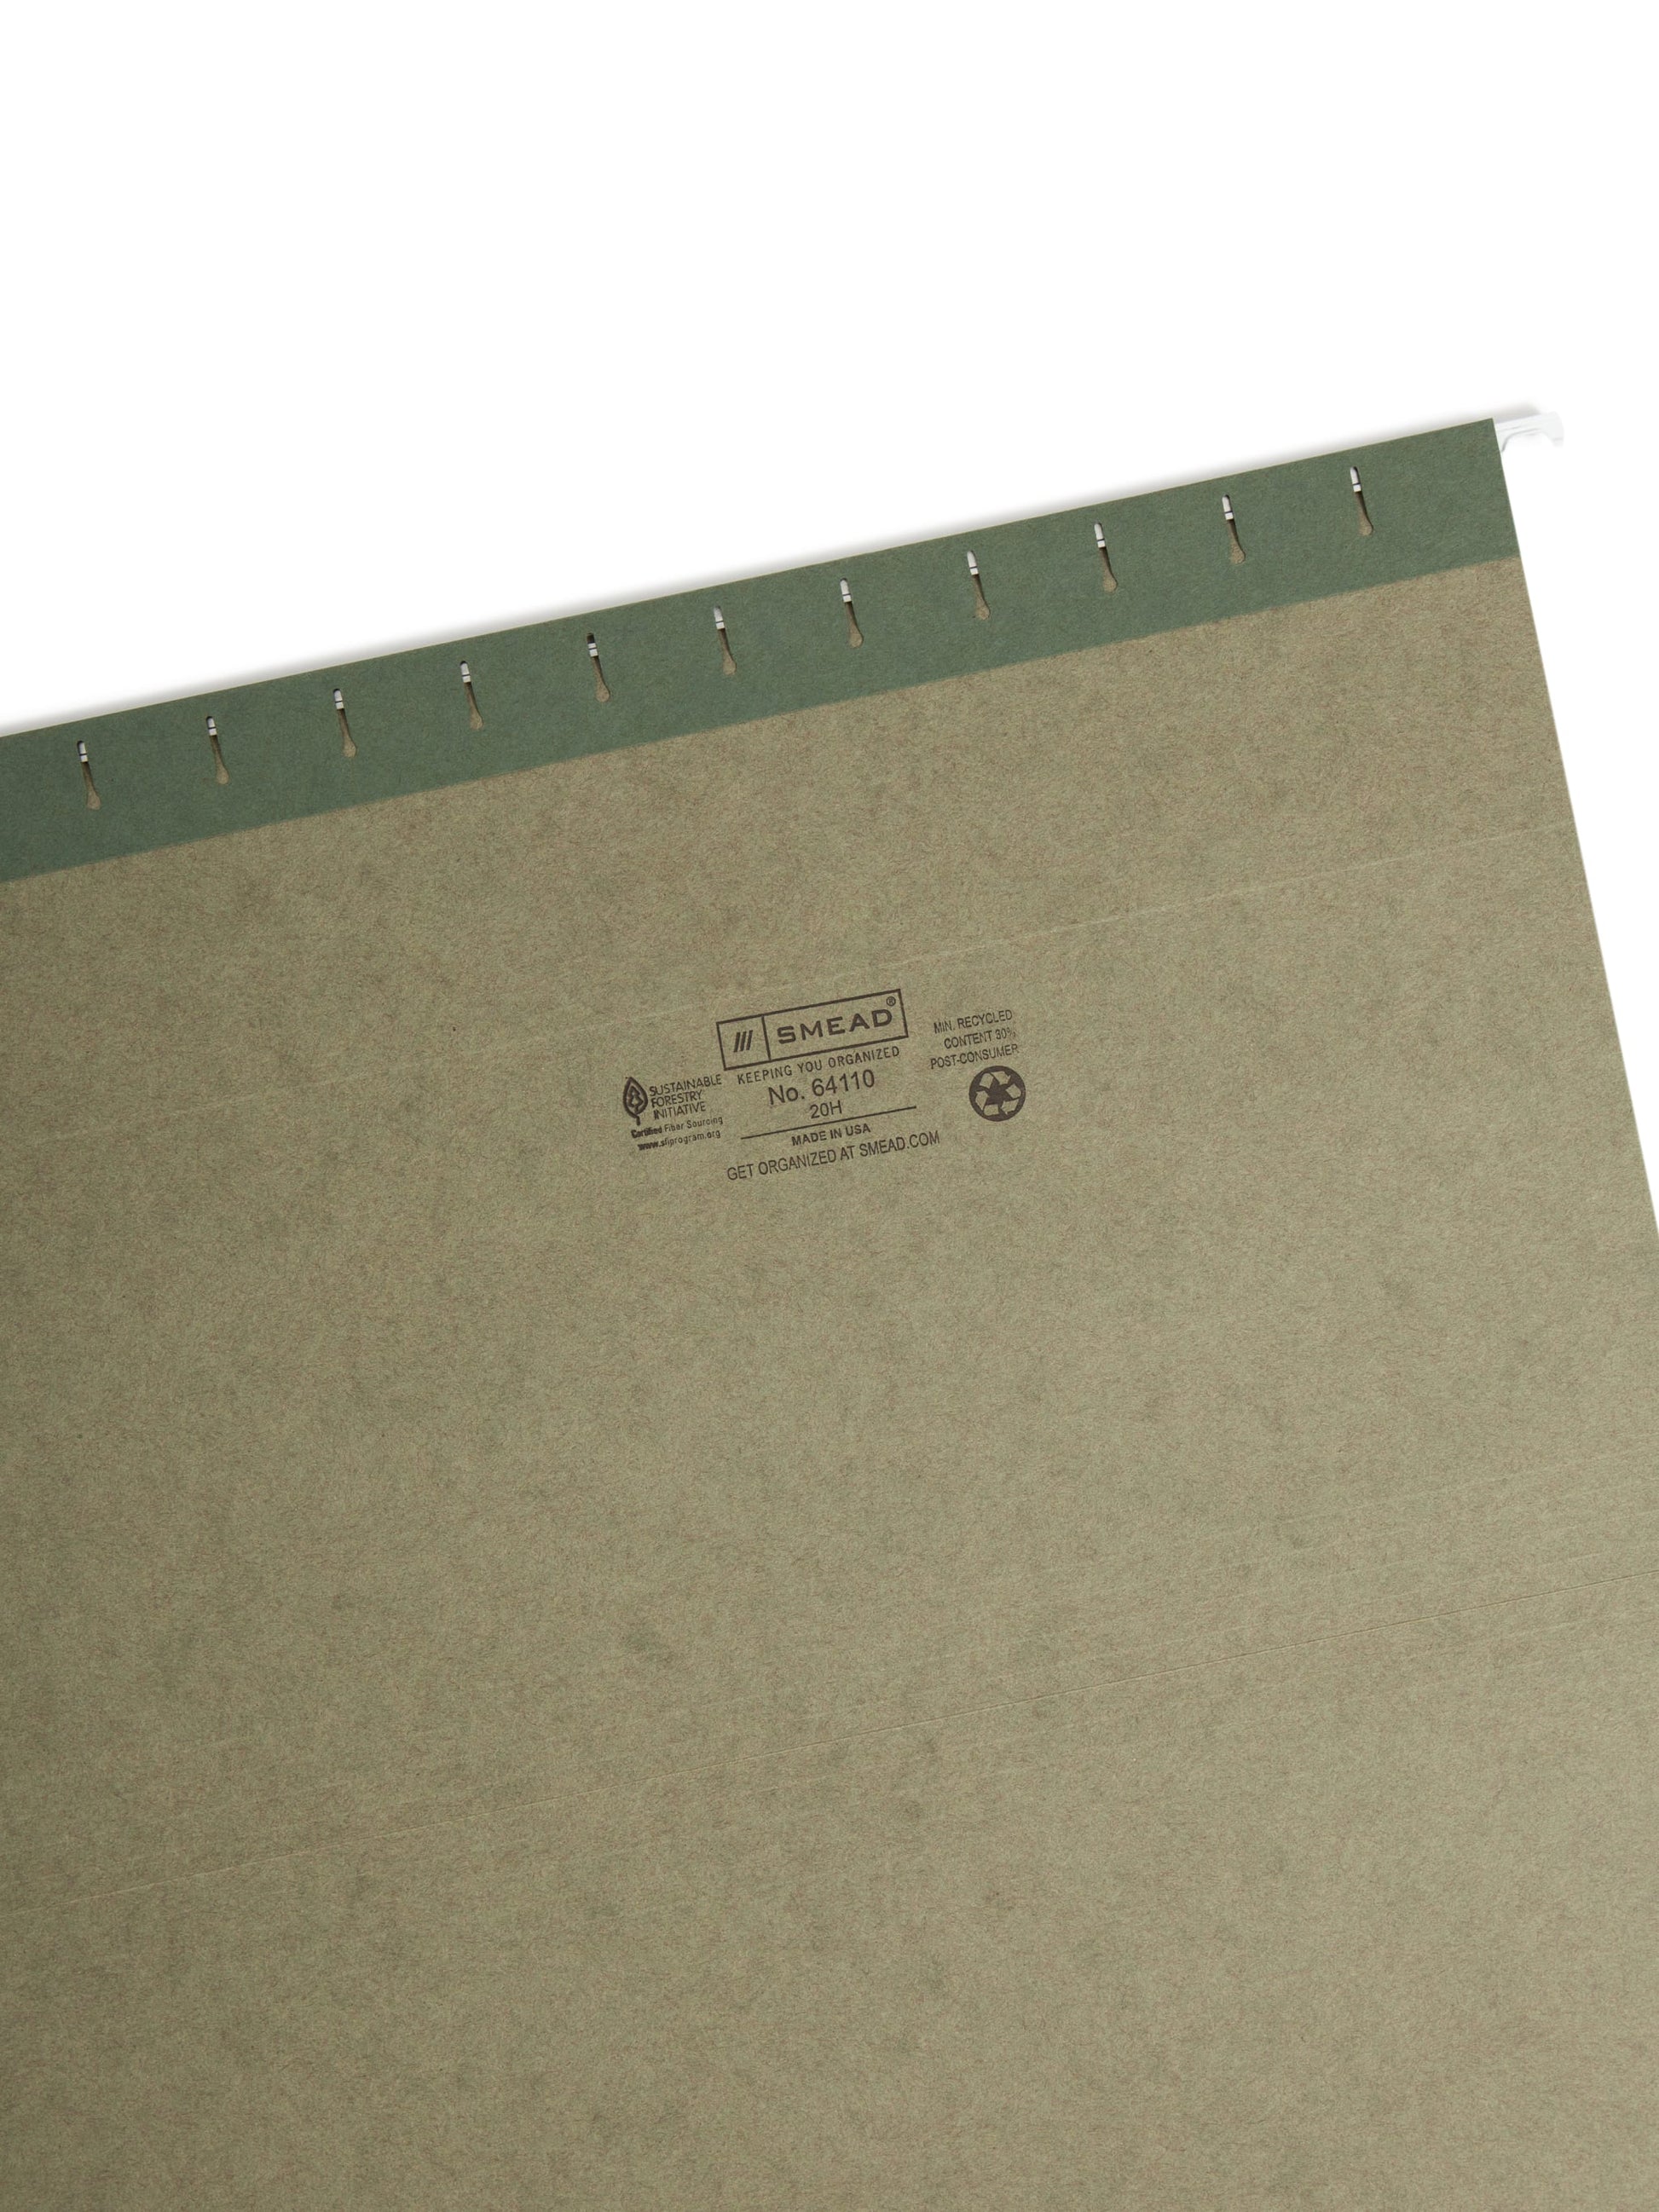 Standard Hanging File Folders, Without Tabs, Standard Green Color, Legal Size, Set of 25, 086486641104